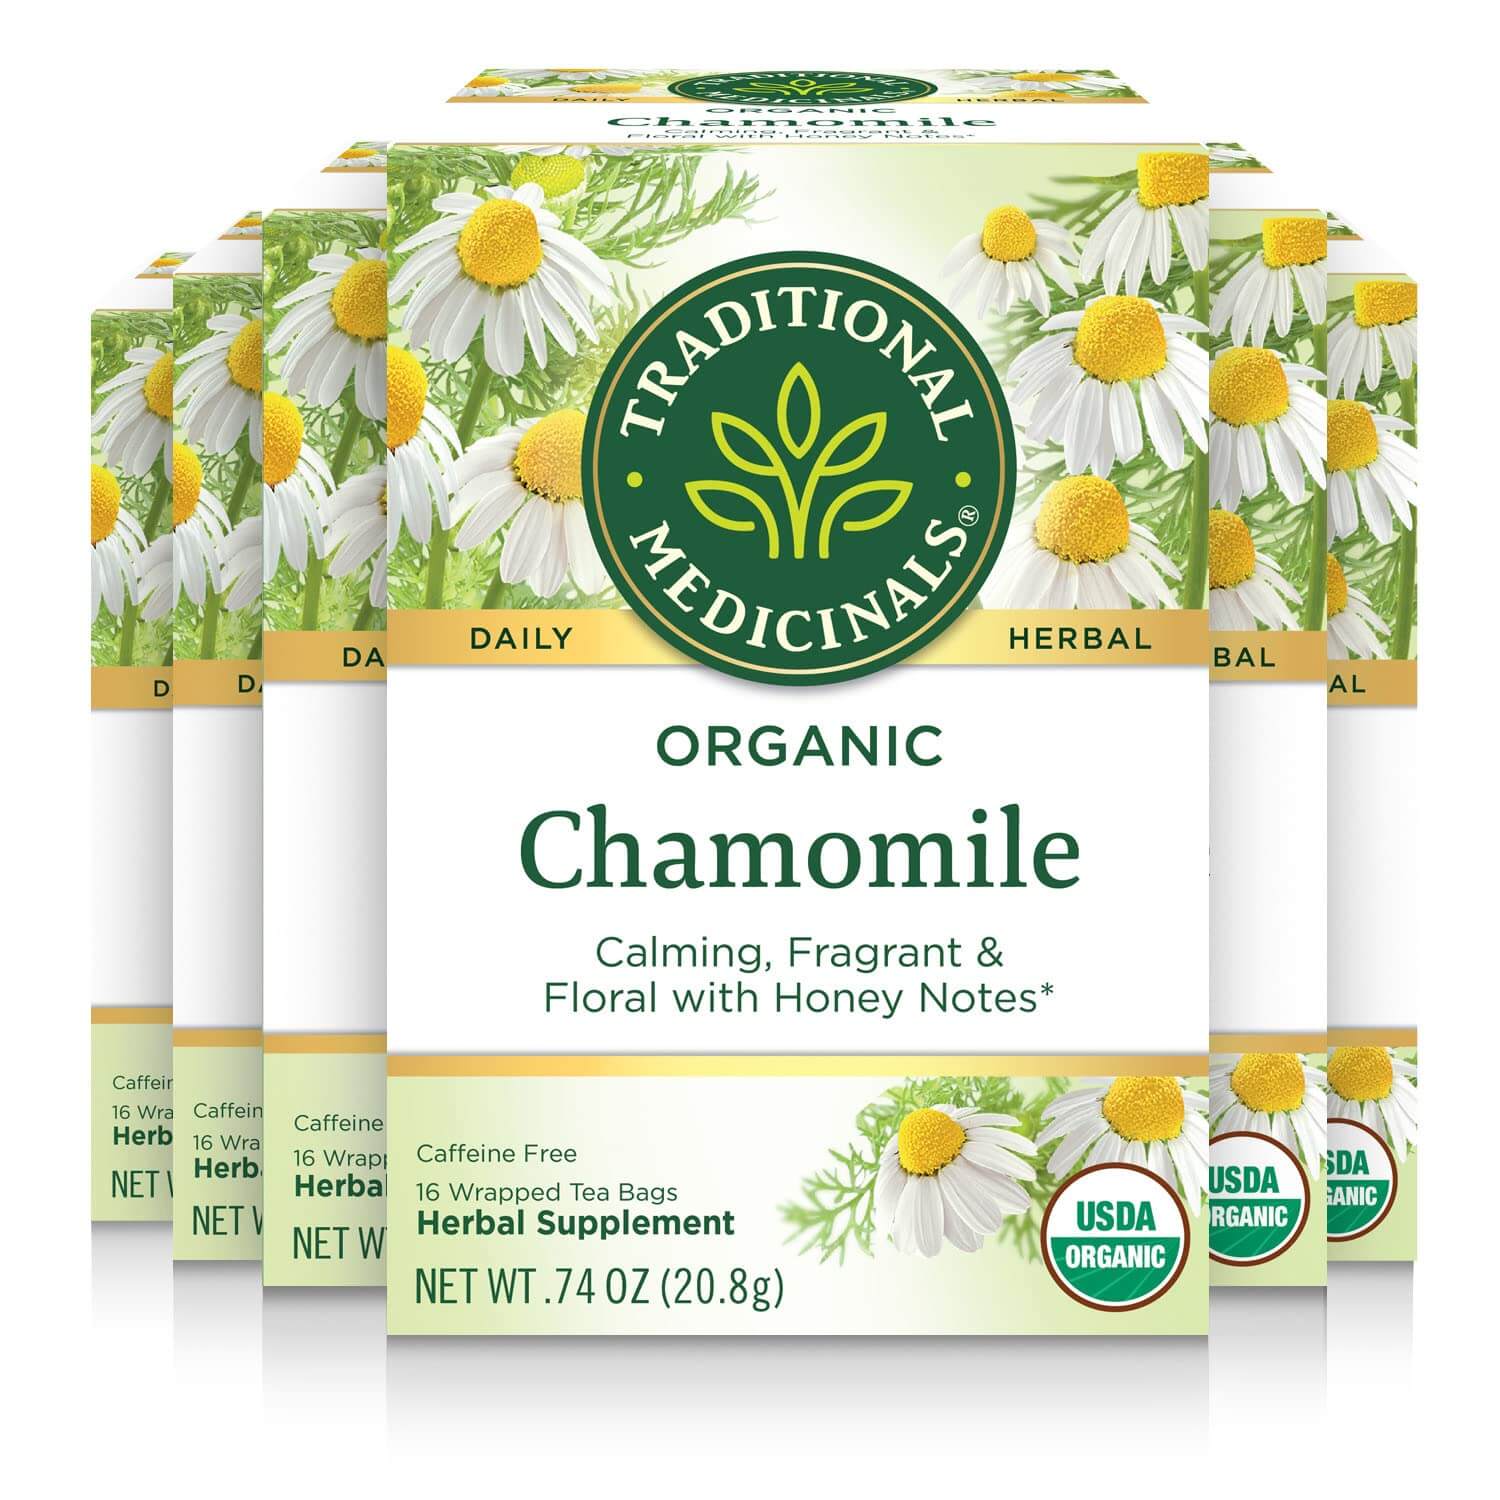 Amazon's Best Selling Chamomile Tea: Traditional Medicinals Organic Chamomile